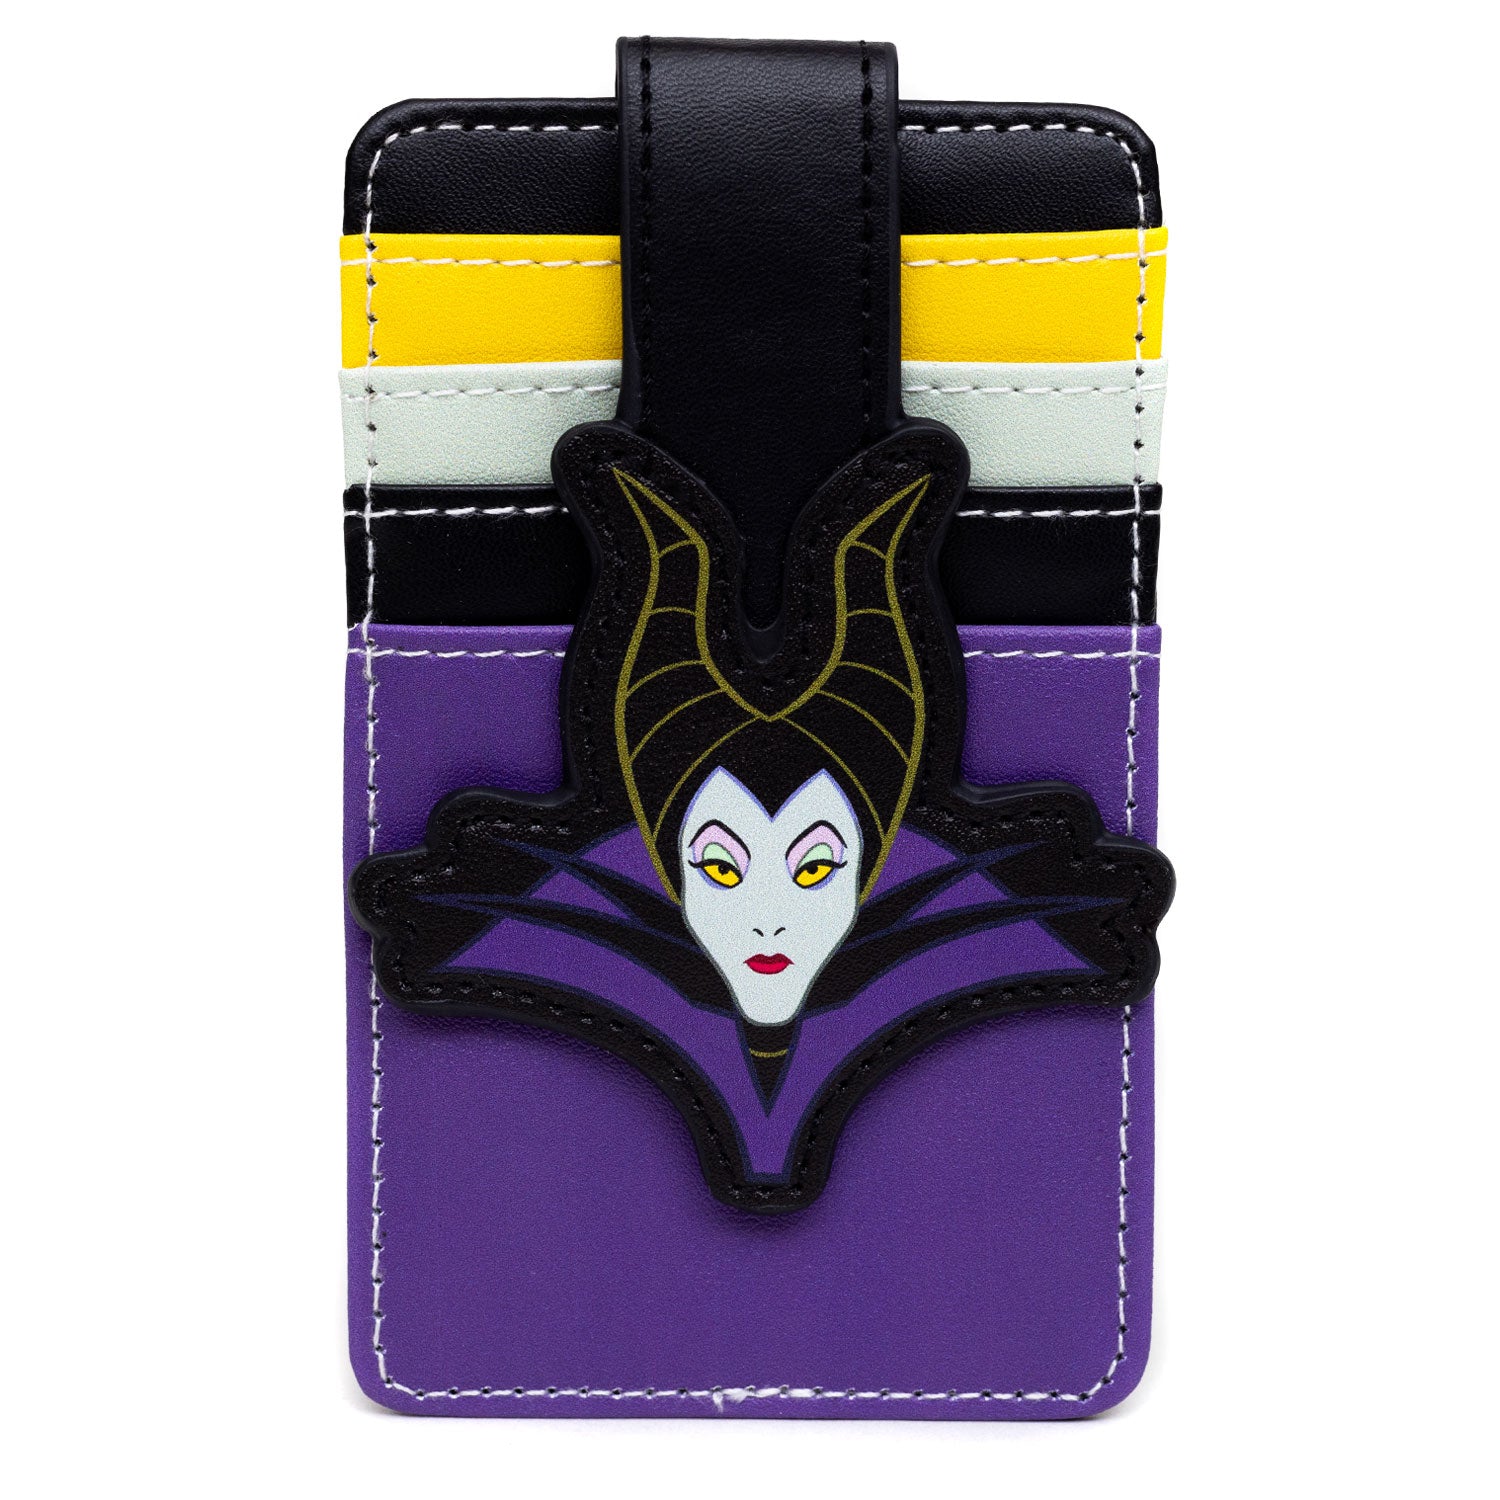  Loungefly Disney Maleficent Sleeping Beauty Crossbody Satchel Handbag  Purse : Clothing, Shoes & Jewelry